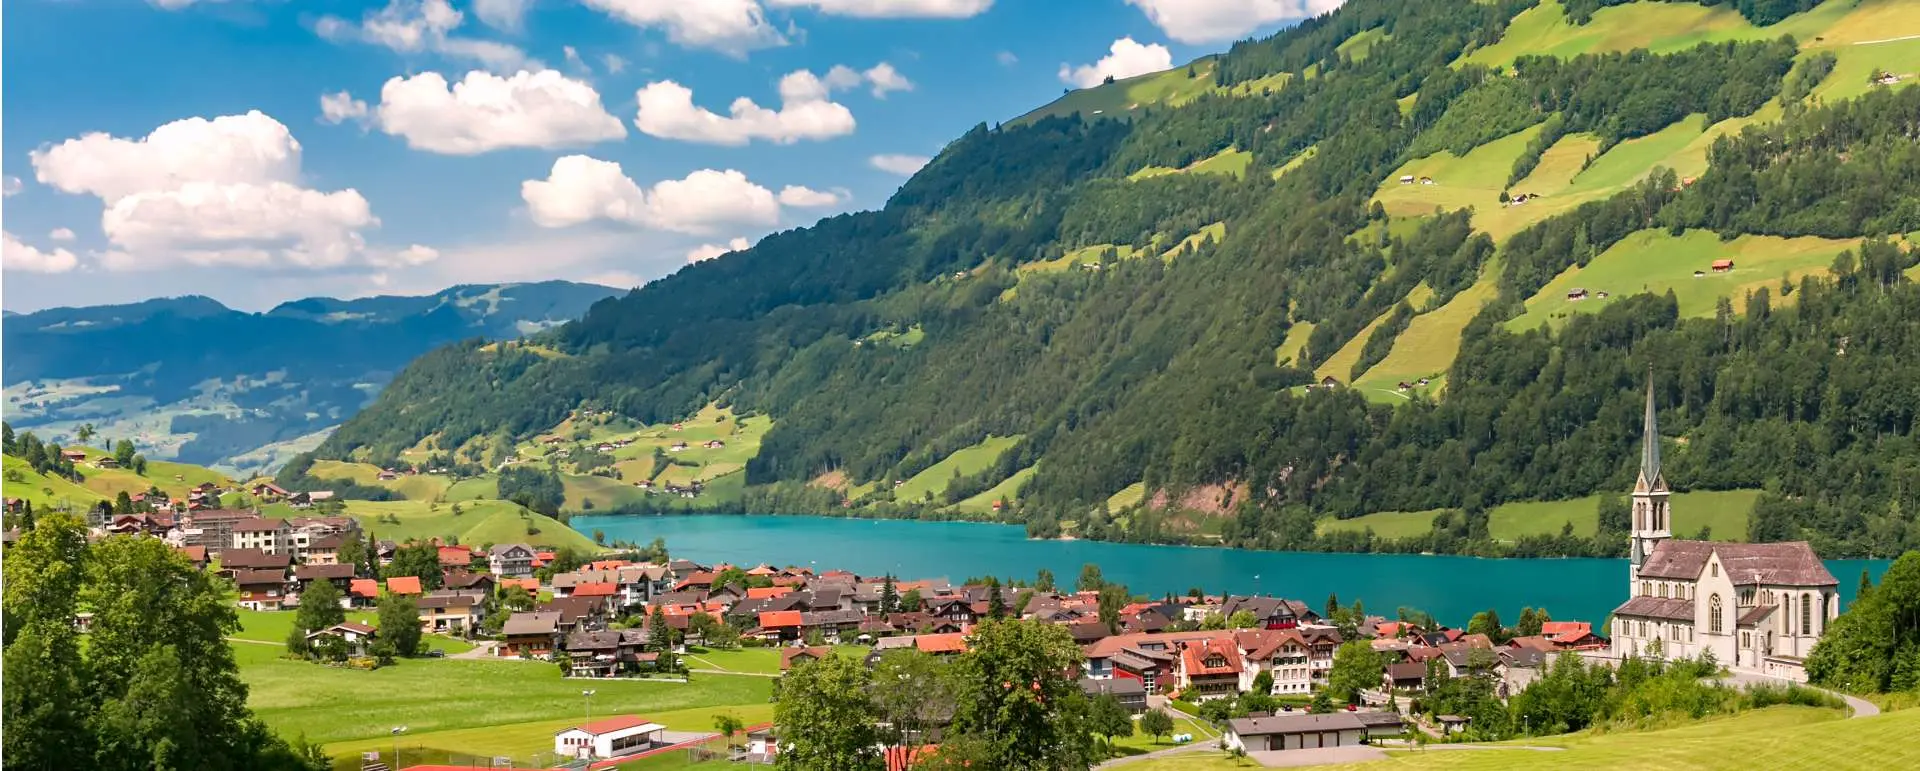 Cantón de Obwalden - el destino para grupos